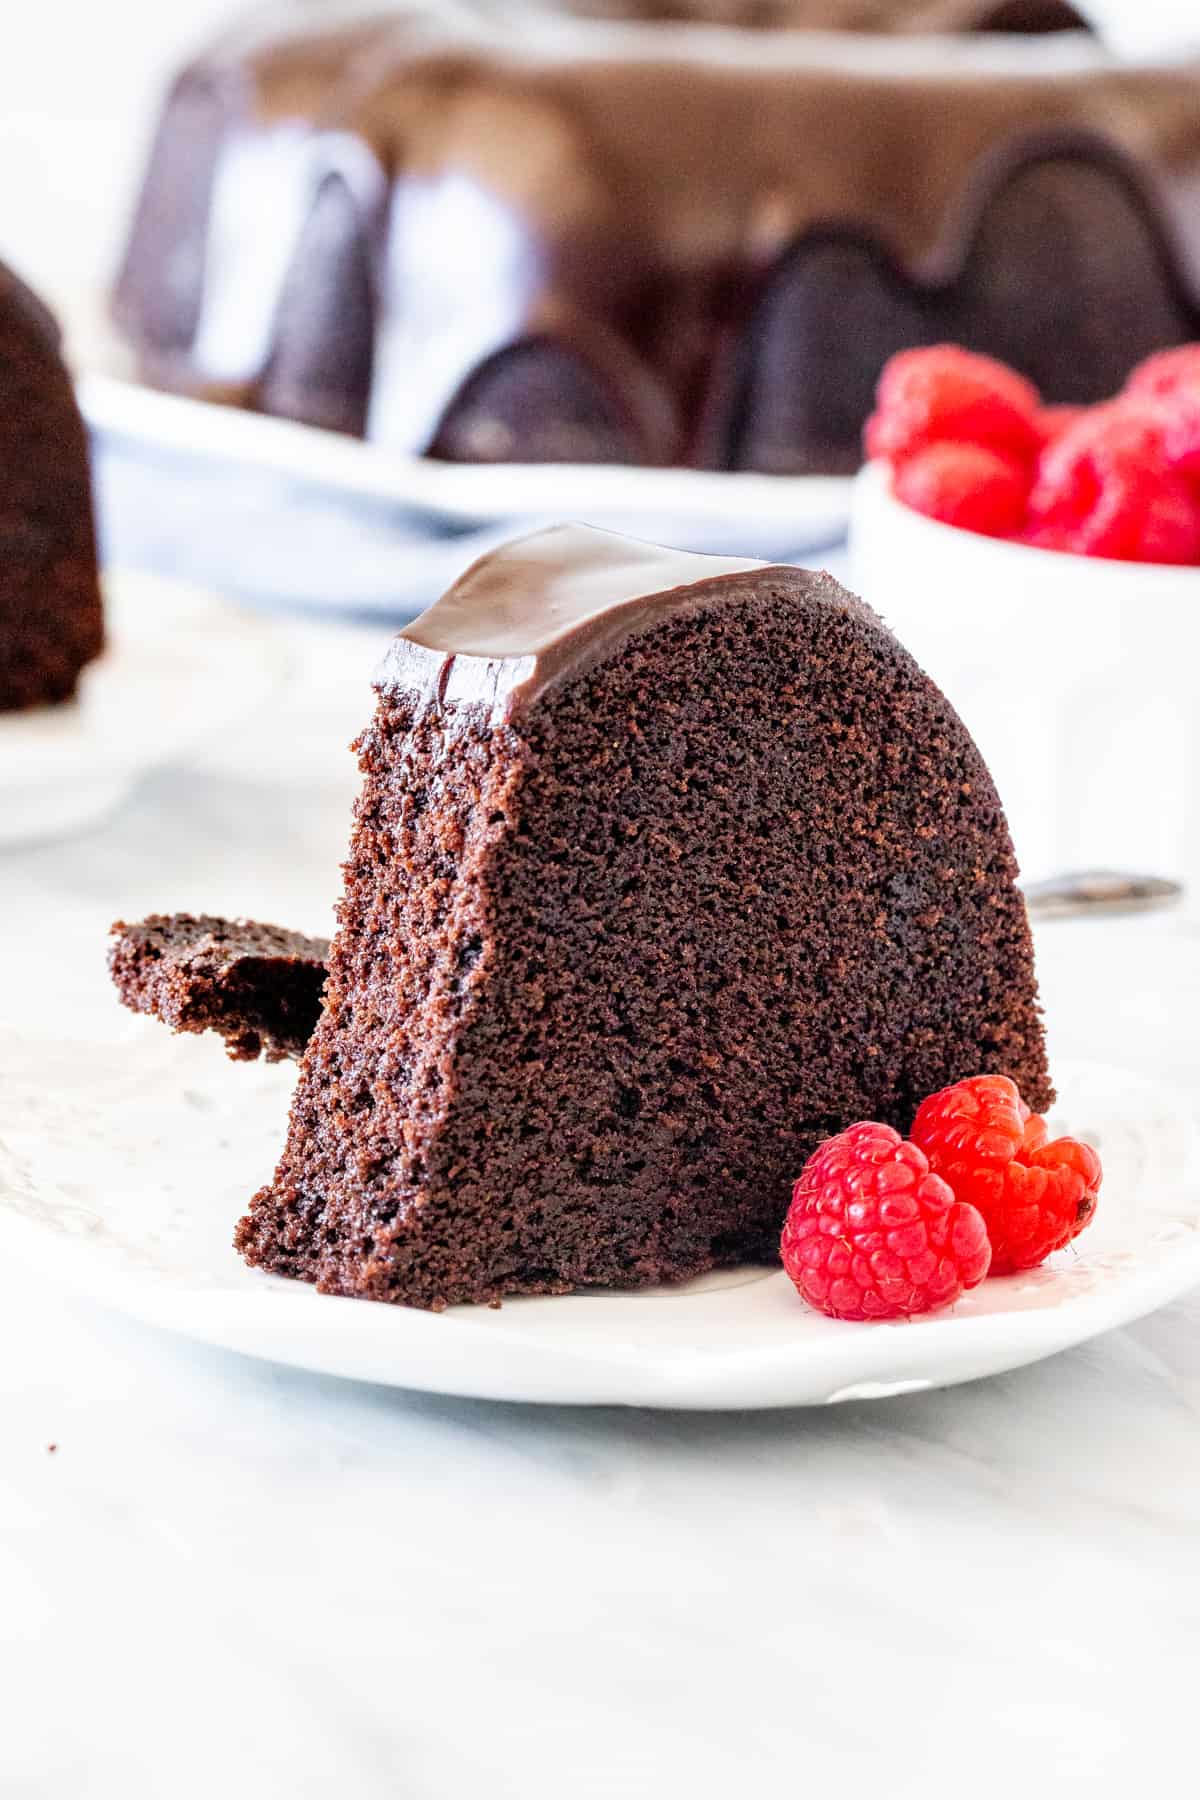 Slice of chocolate pound cake